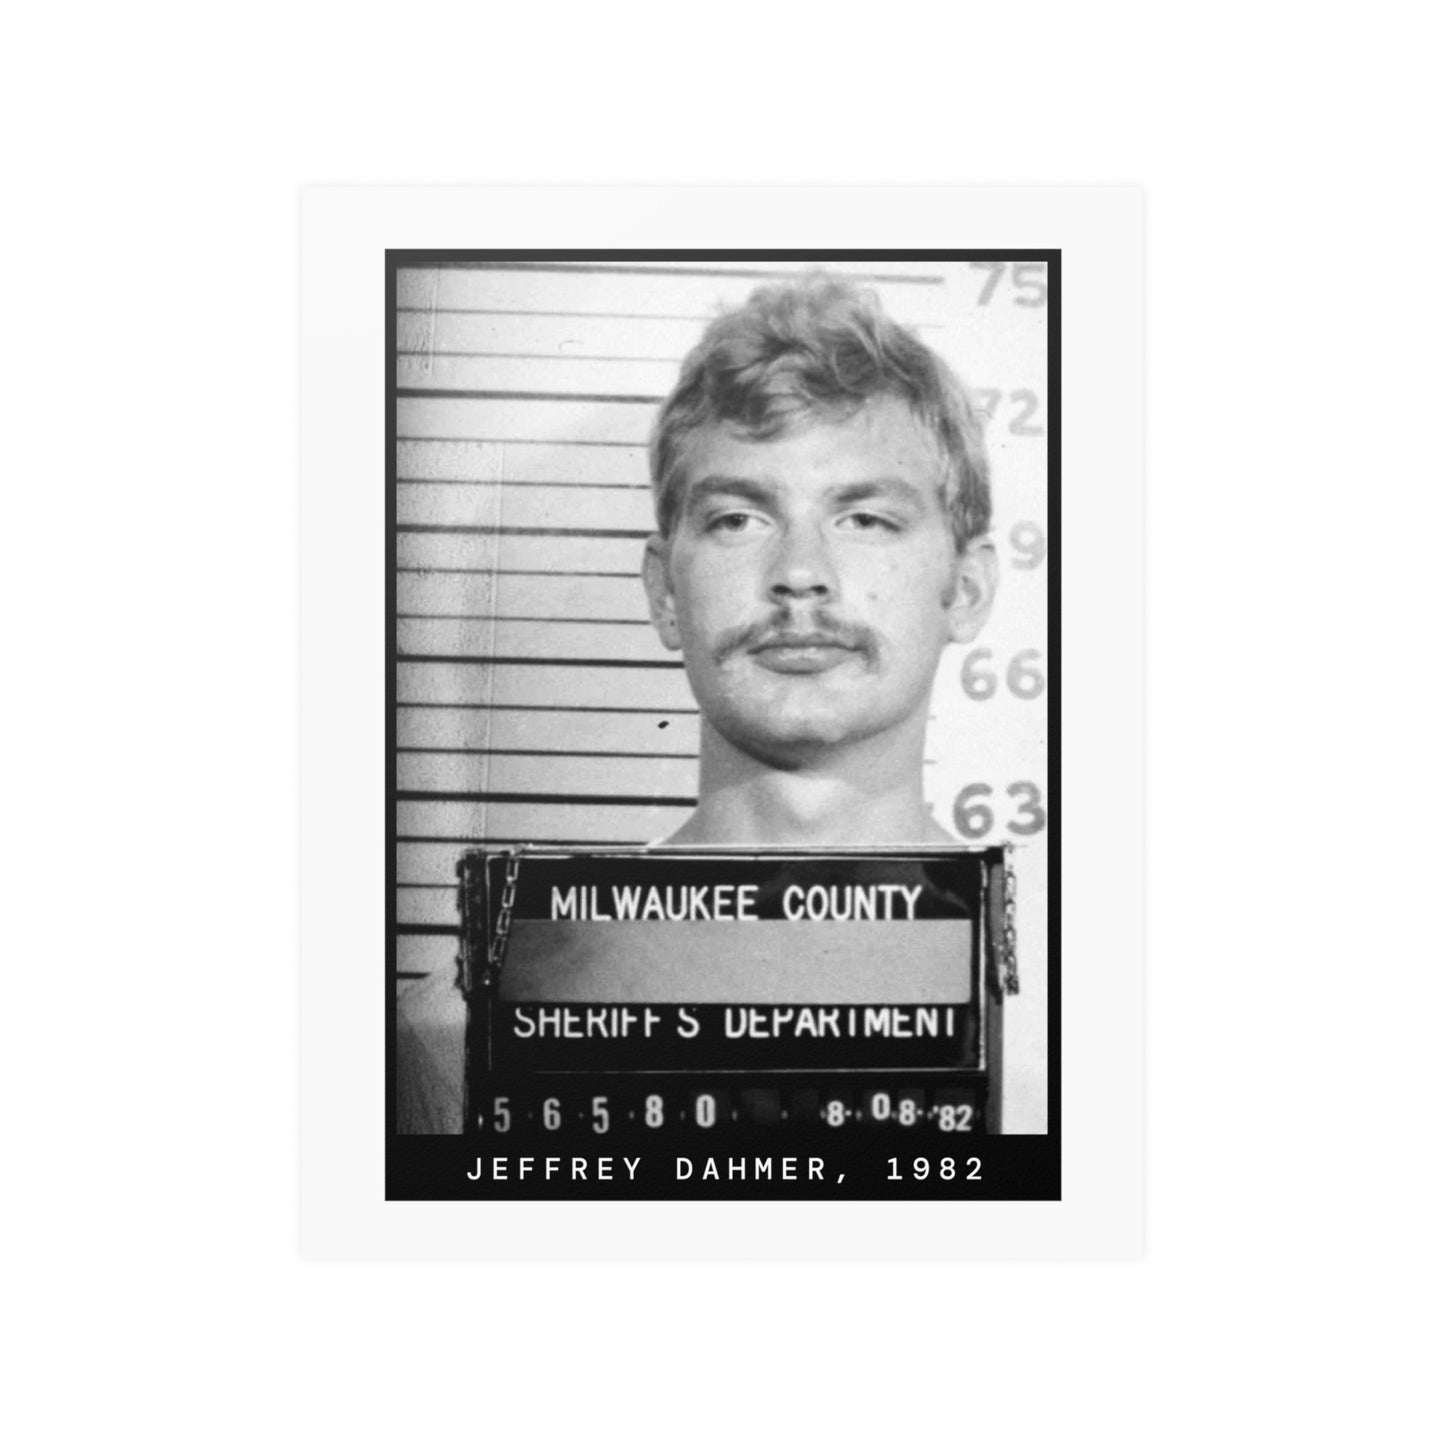 Jeffrey Dahmer, 1982 Serial Killer Mugshot Poster